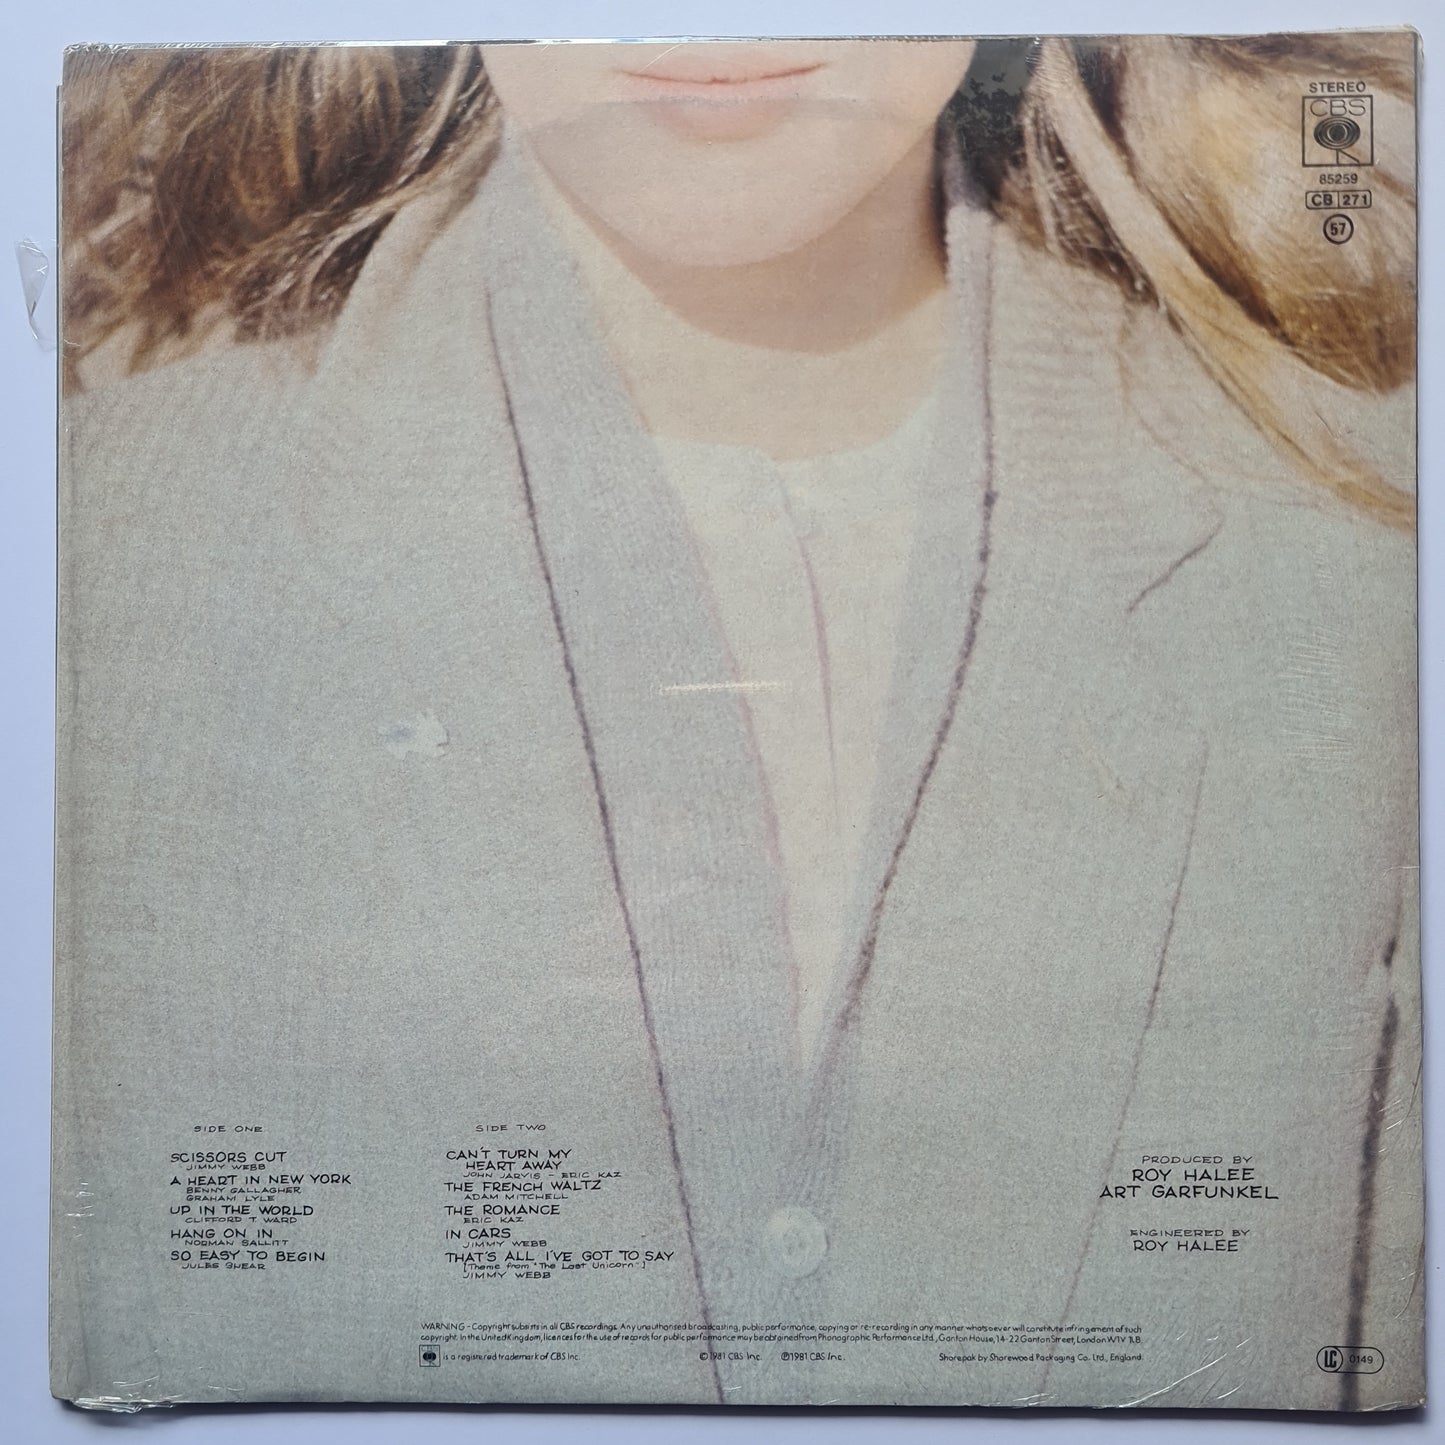 Art Garfunkel – Scissors Cut - 1981 - Vinyl Record